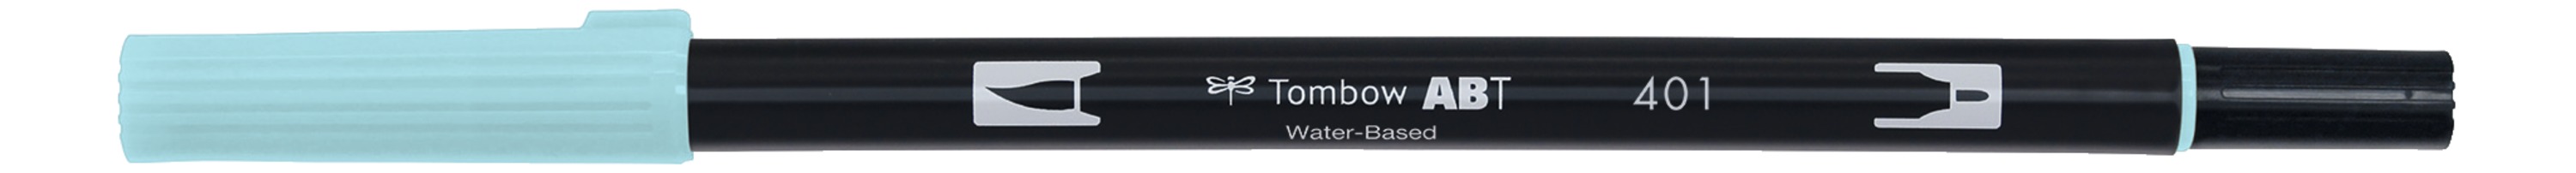 Tombow ABT Dual Brush 401 aqua